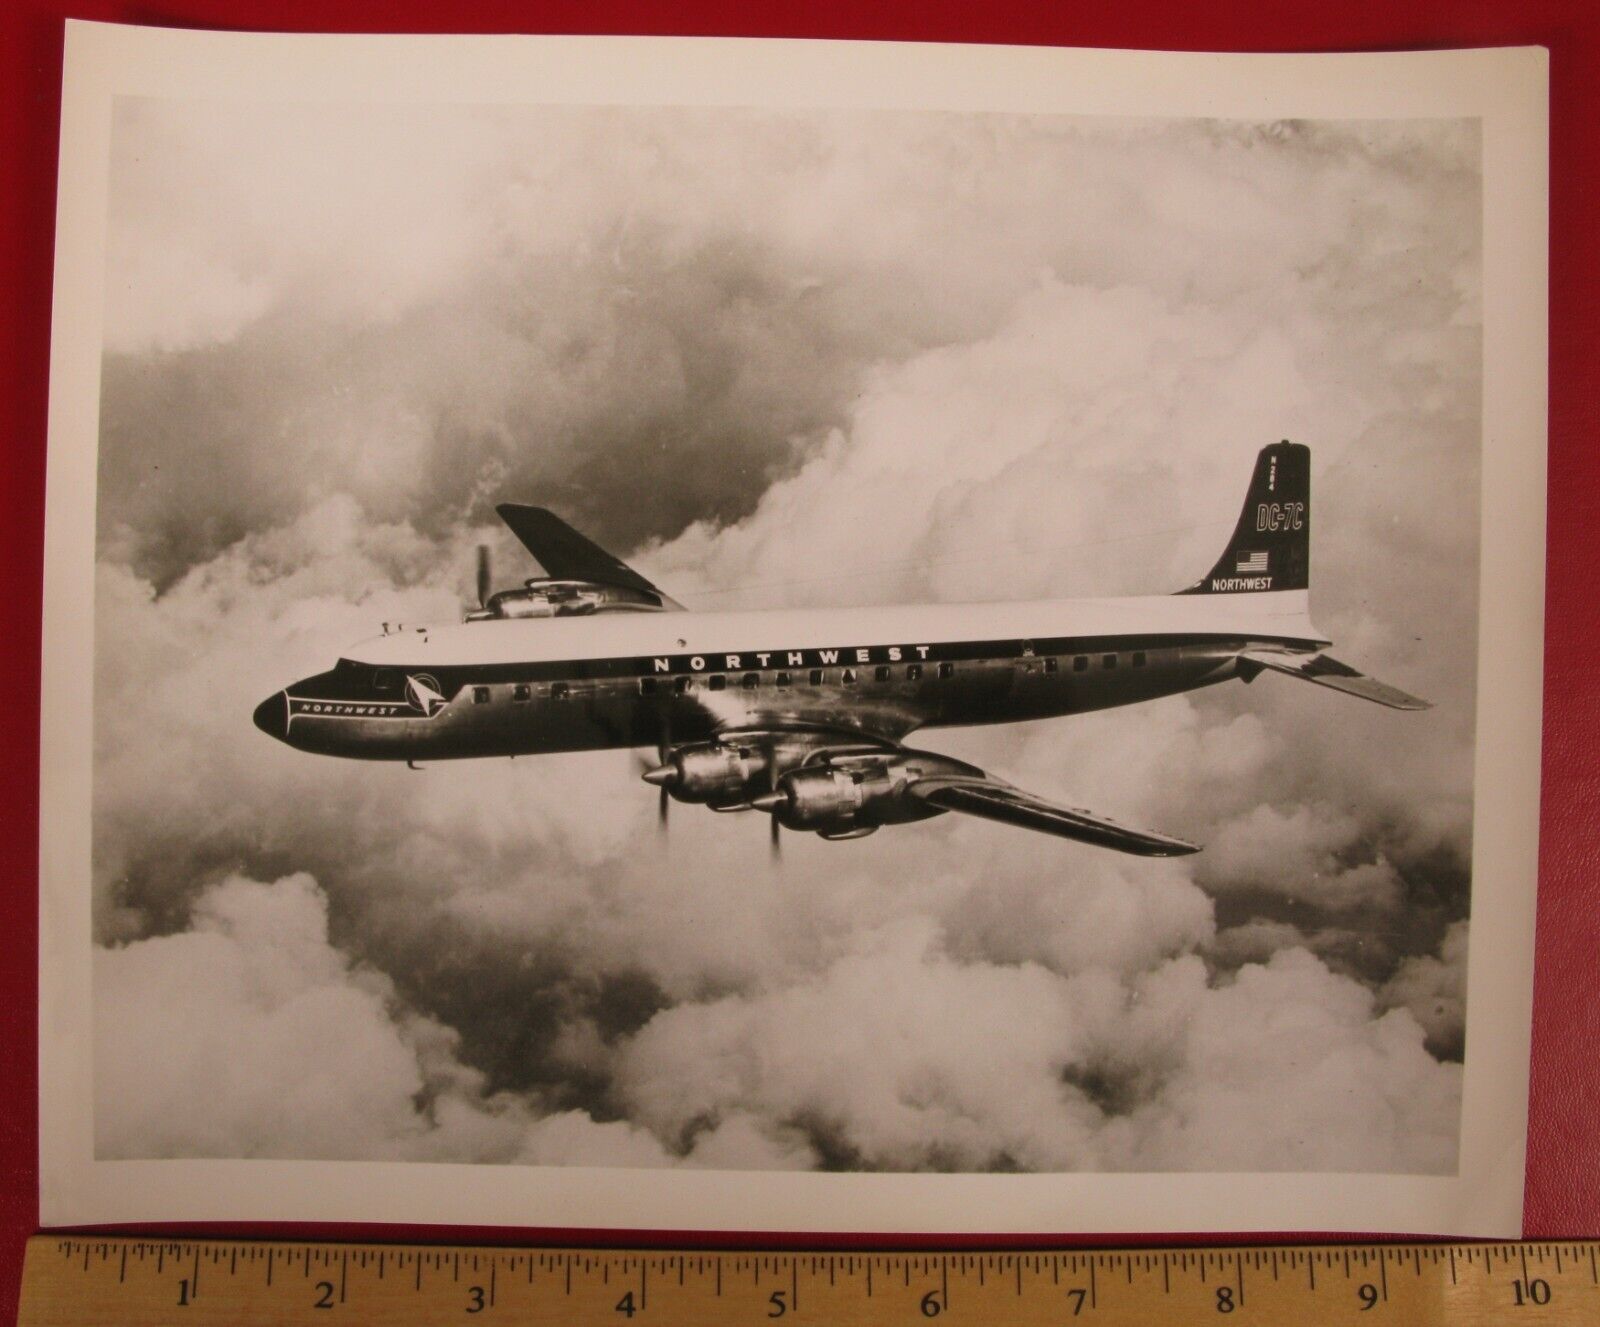 VINTAGE PHOTOGRAPH AIRPLANE AIRCRAFT NORTHWEST DC-7C PASSENGER PLANE 